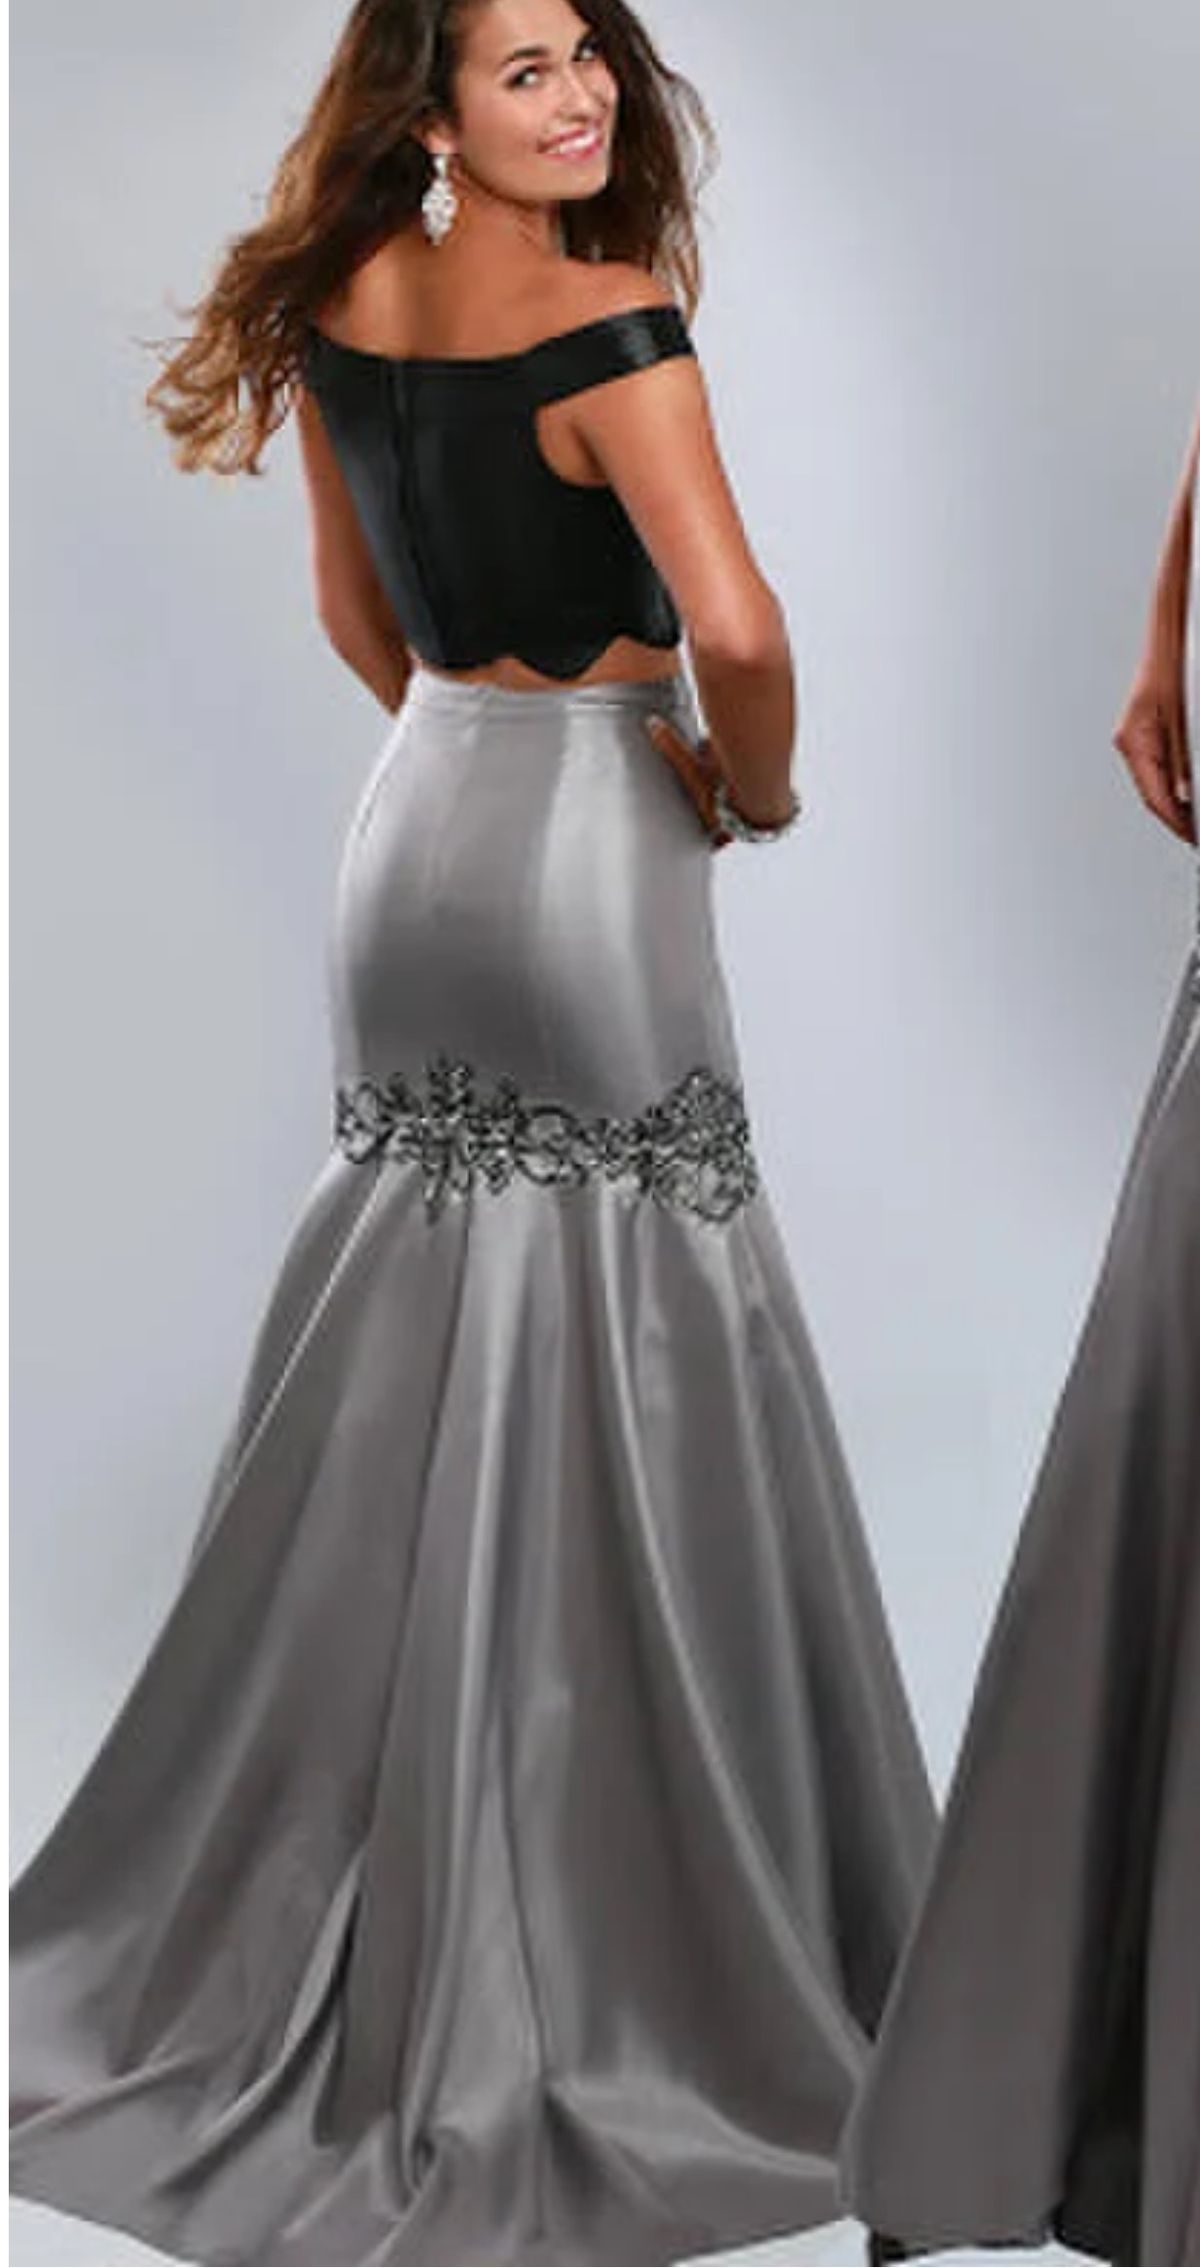 Ritzee Size 10 Prom Black Mermaid Dress on Queenly